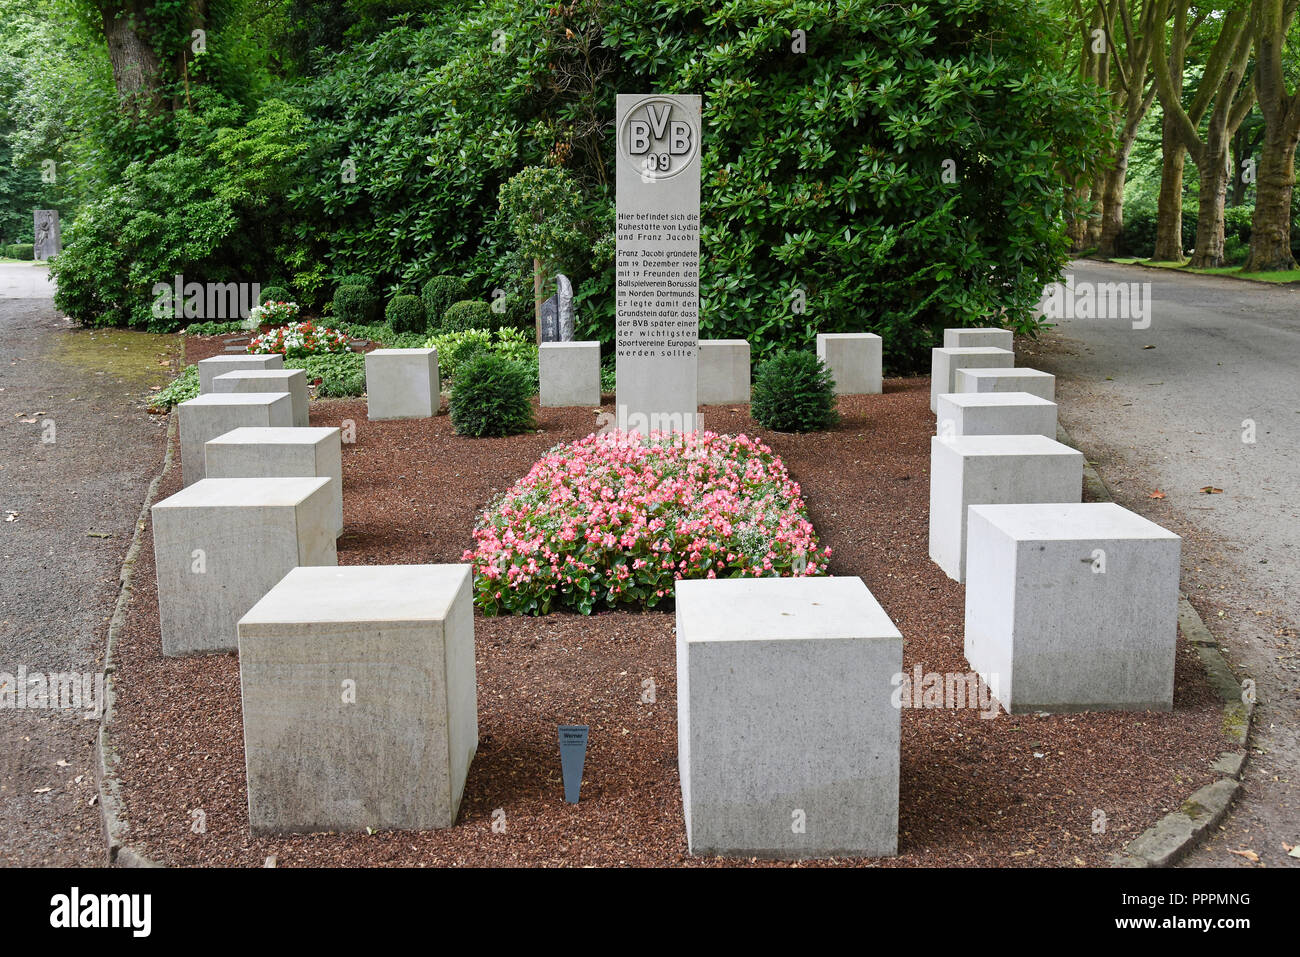 Franz Jacobi, grave, BVB, soccer, functionary, cemetery, Dortmund, Ruhr district, North Rhine-Westphalia, Germany, Südwestfriedhof Stock Photo